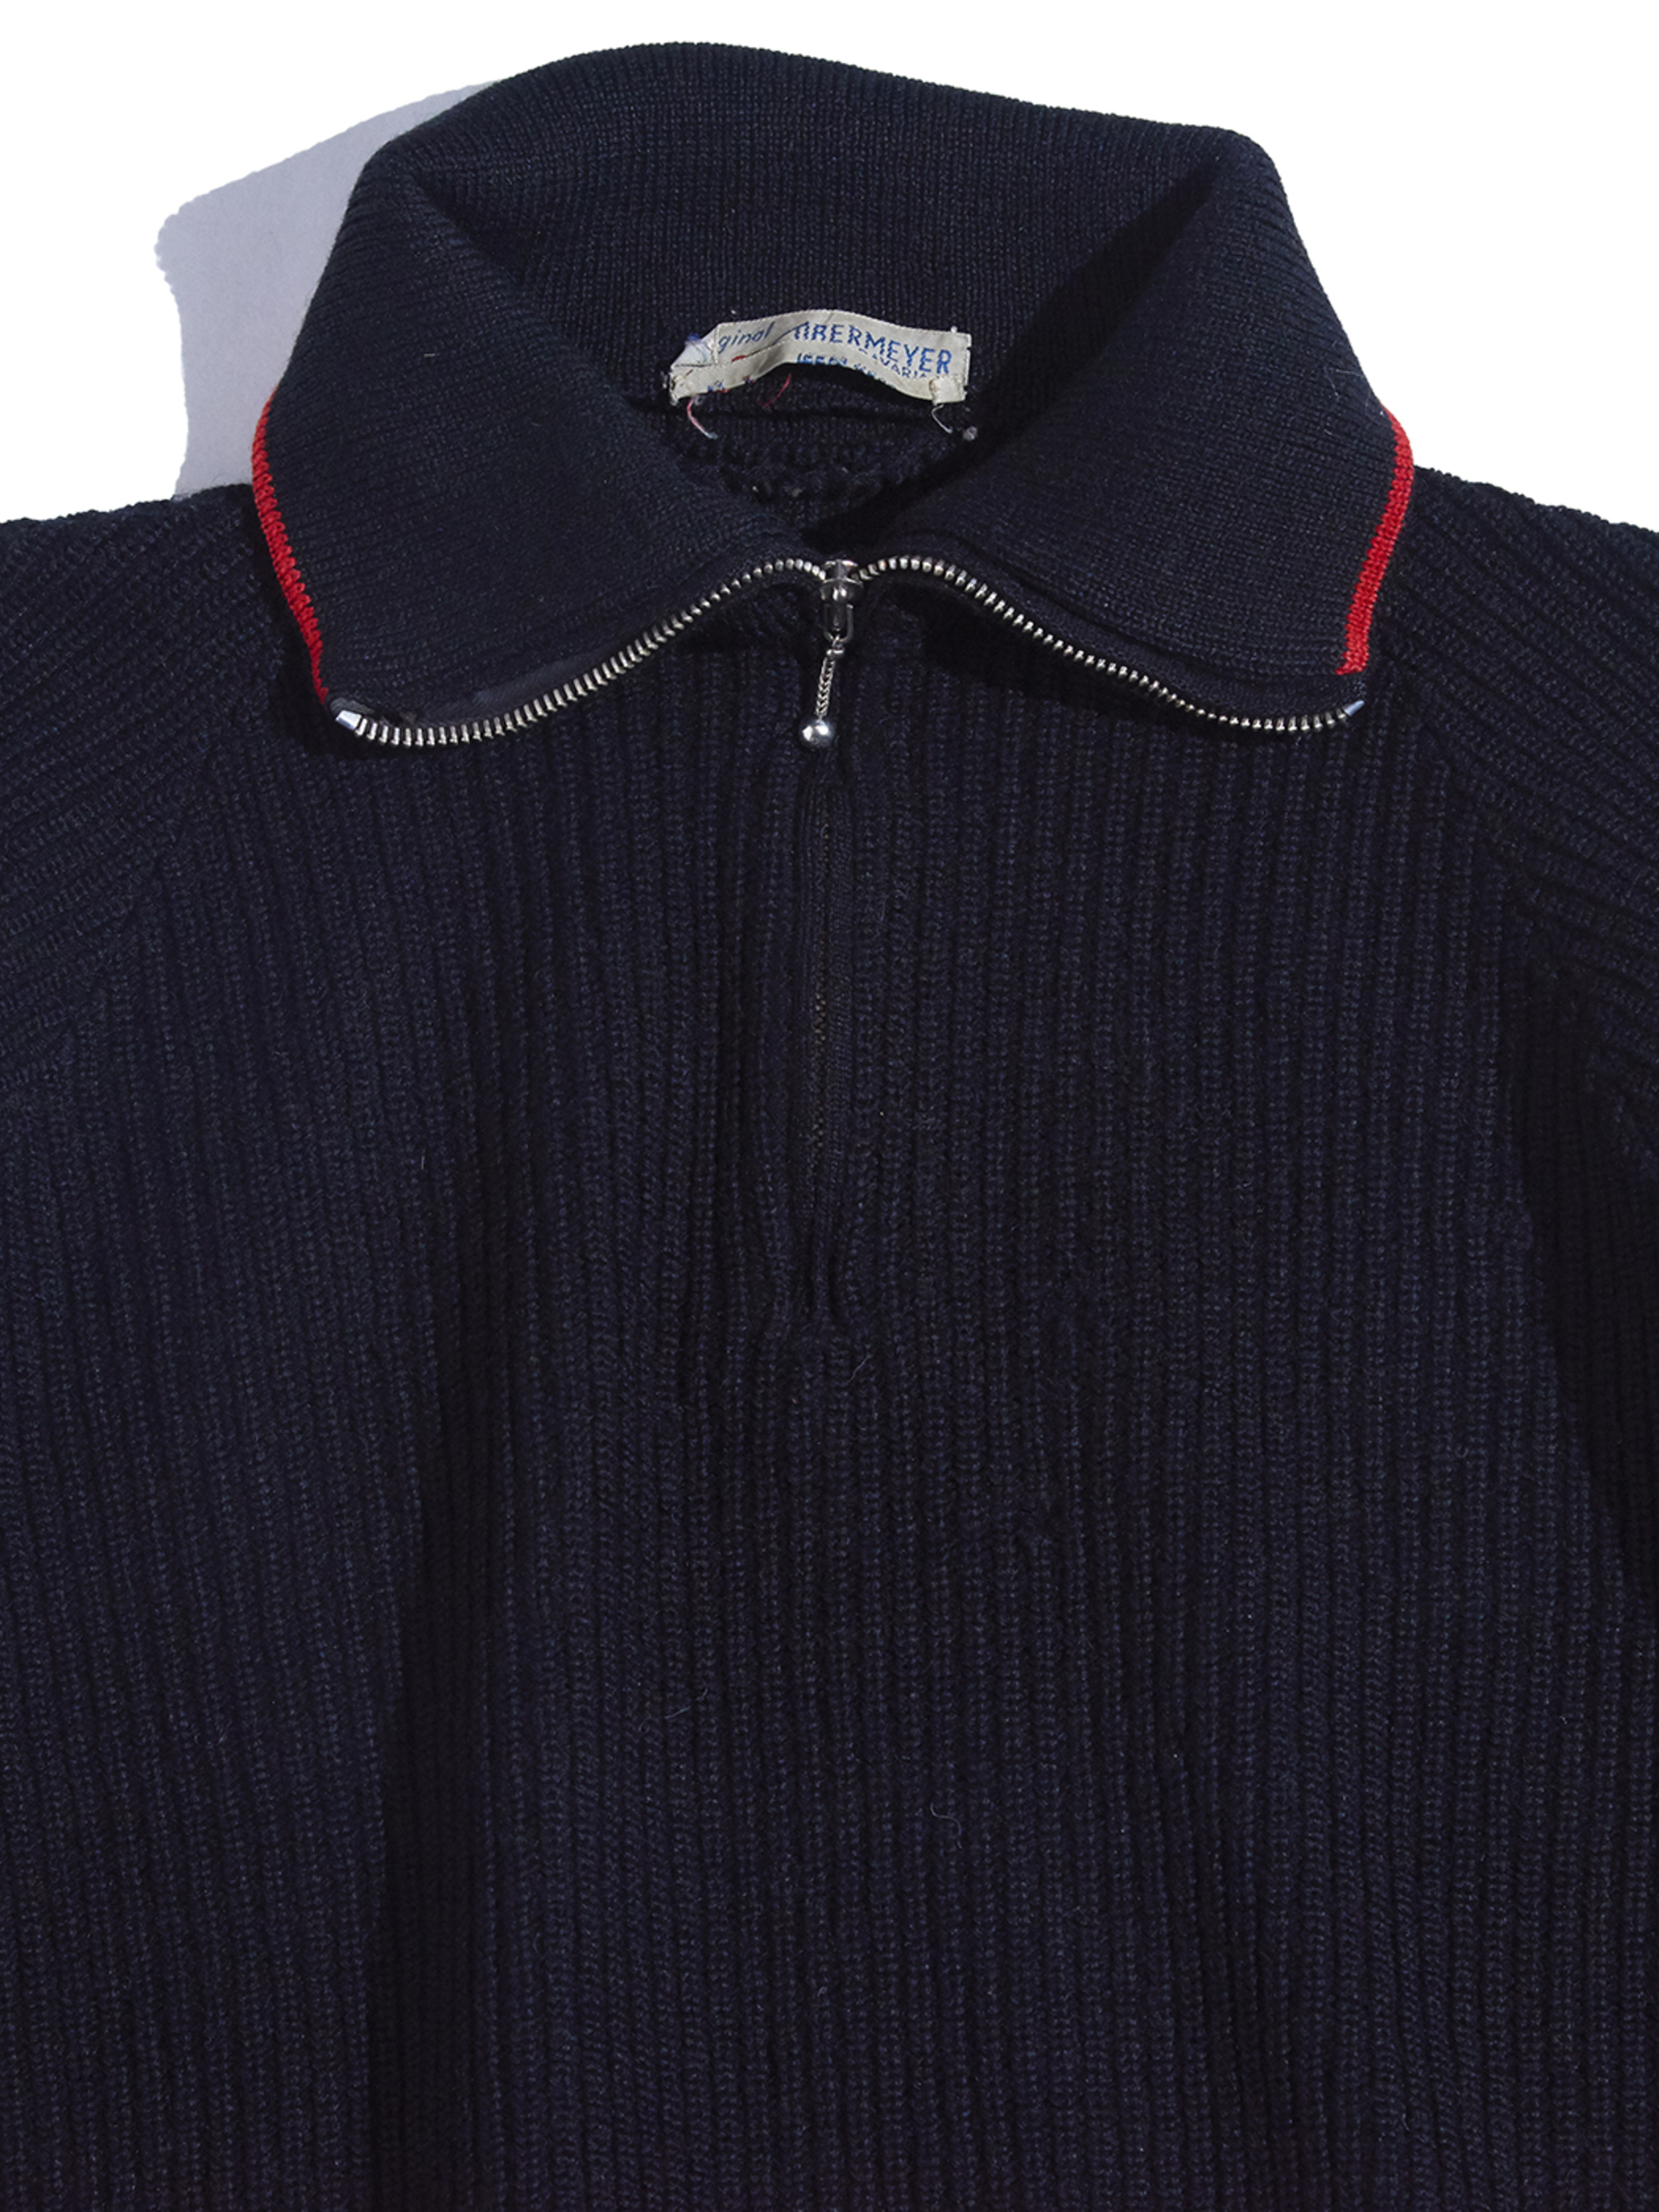 1960s "OBERMEYER" high neck wool half zip knit -BLACK-